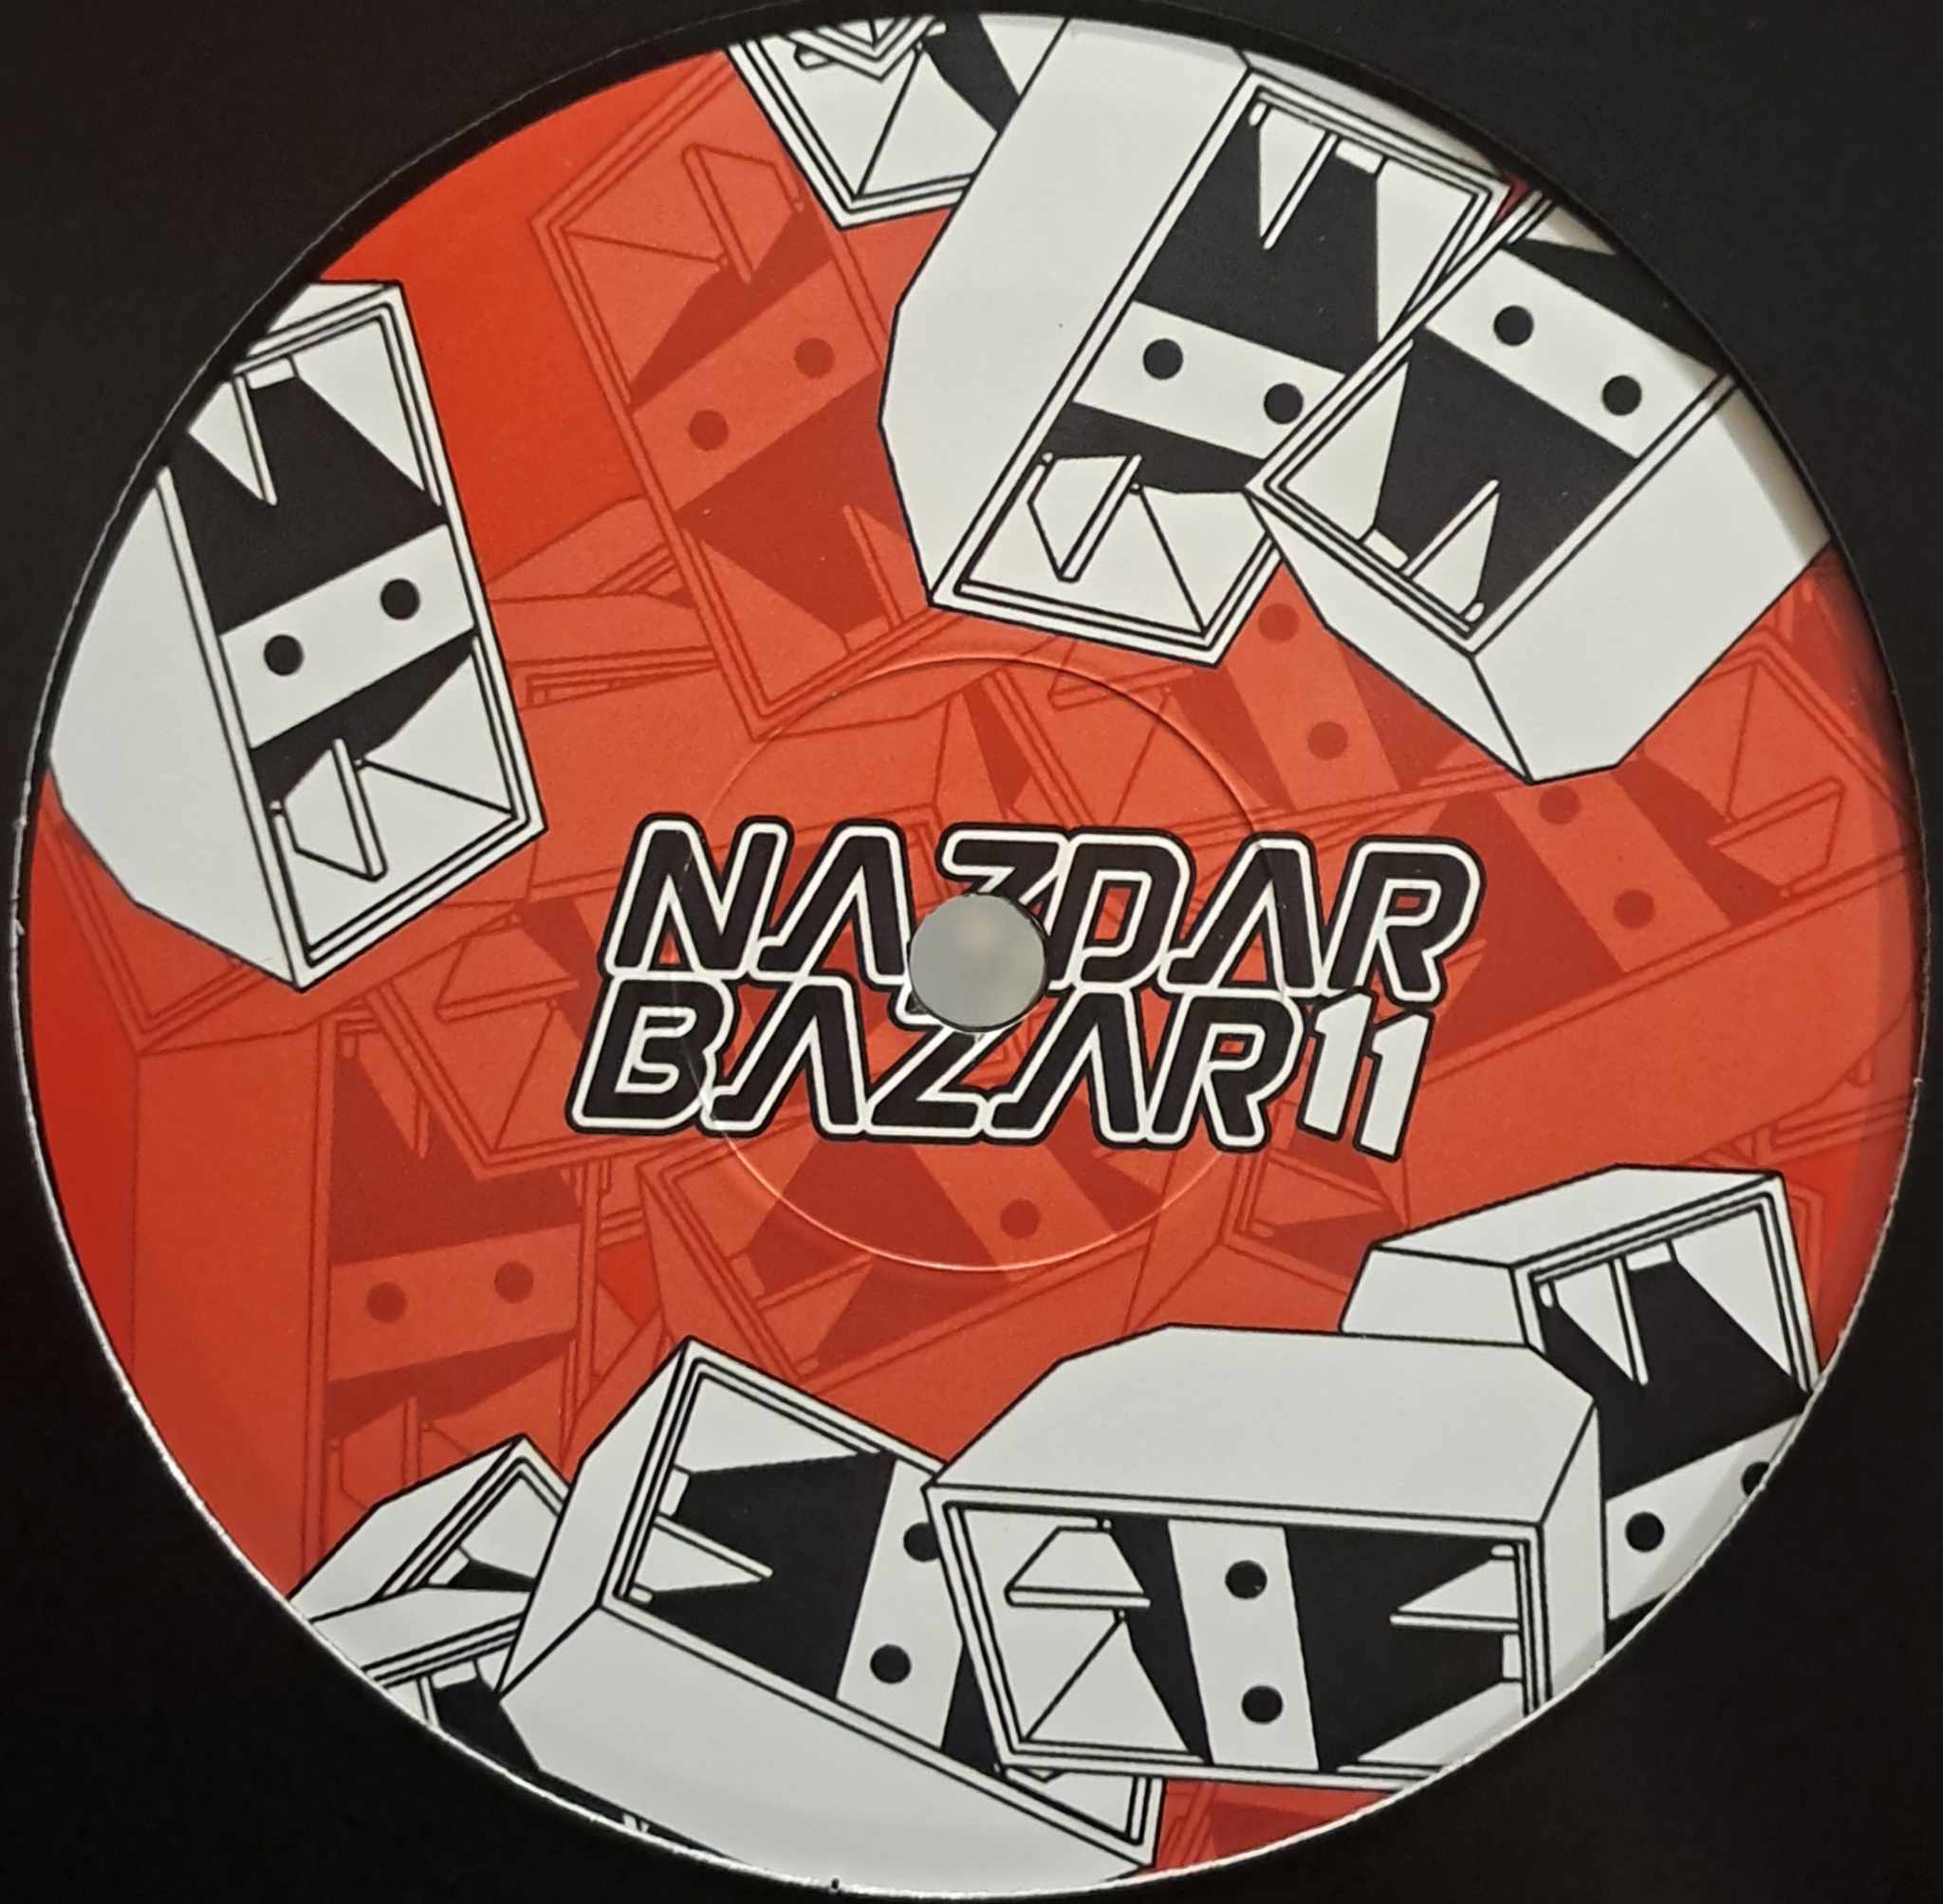 Nazdar Bazar 11 - vinyle freetekno